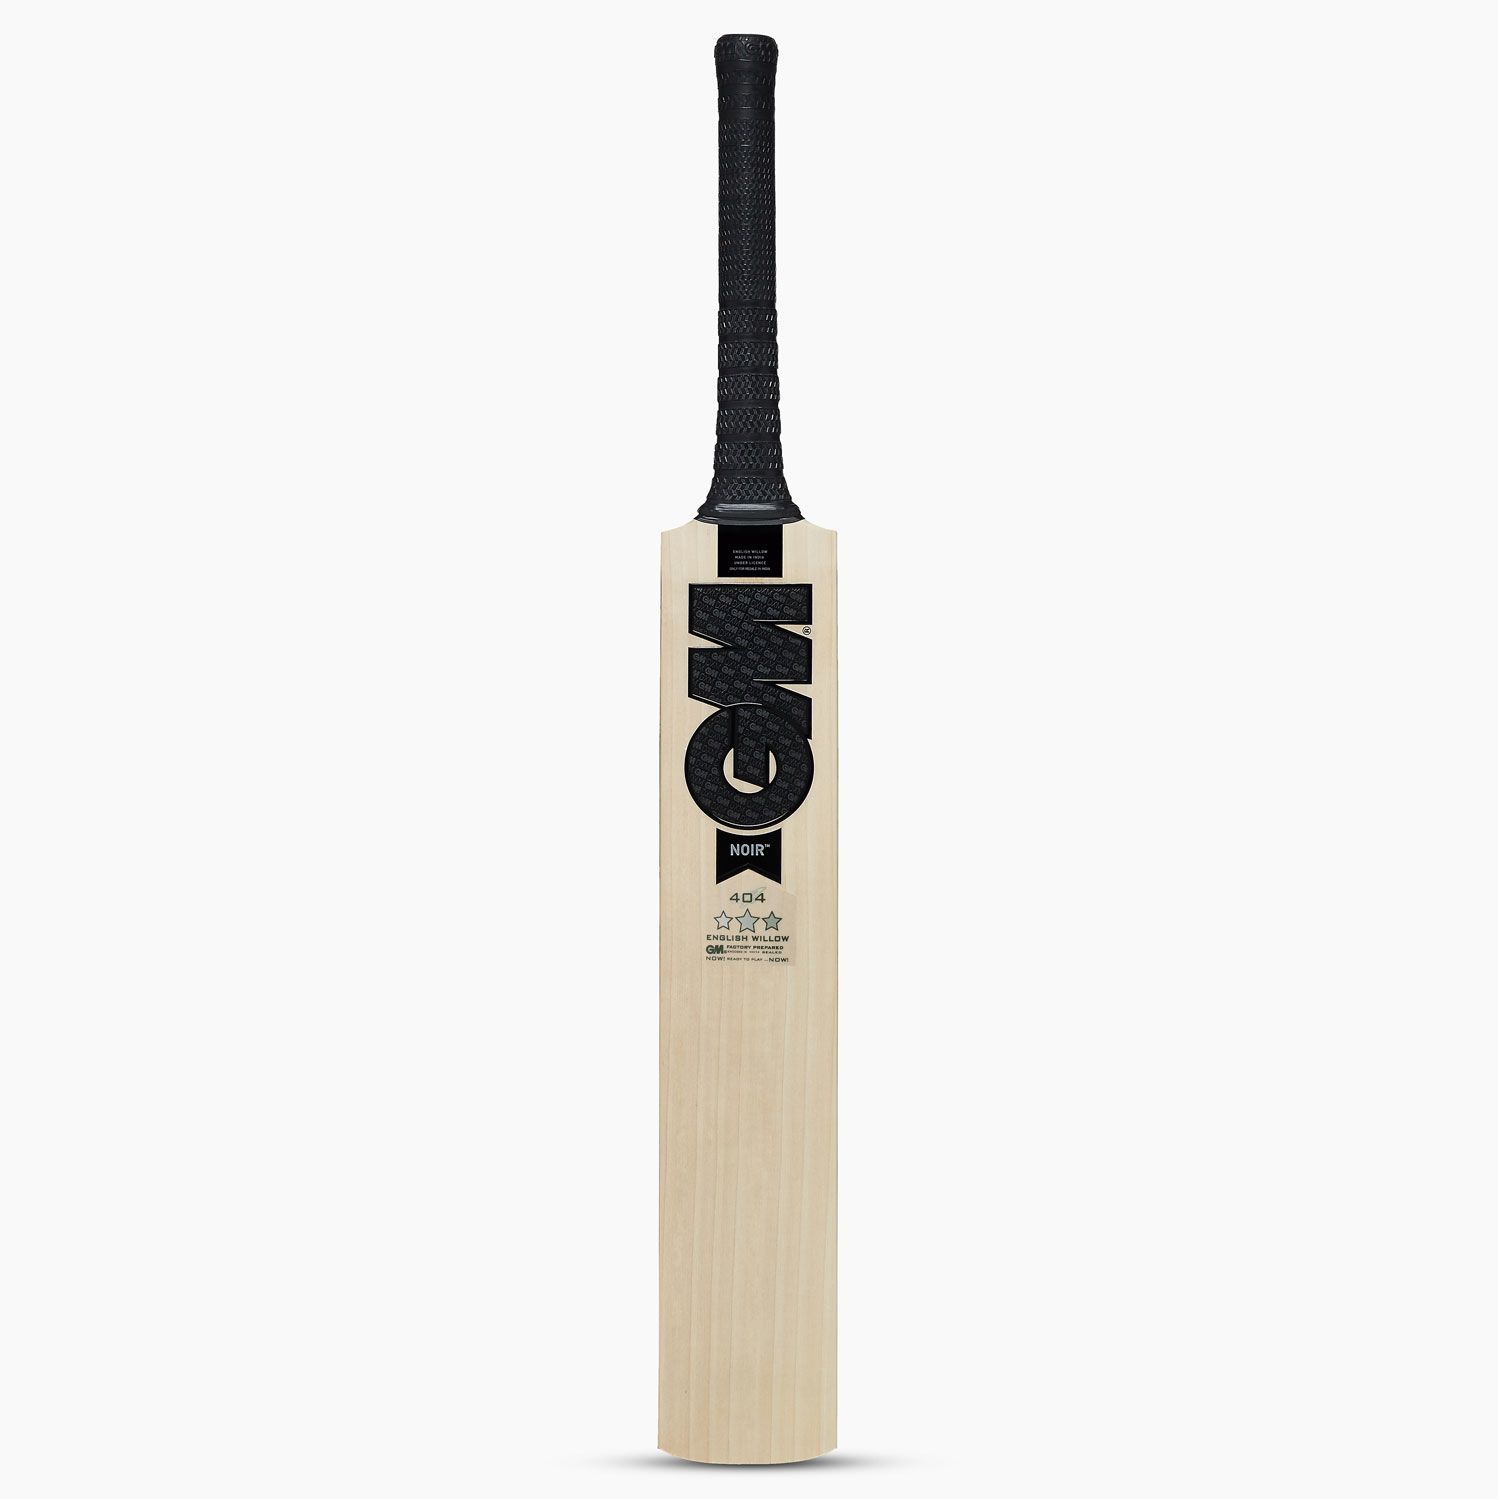 Noir 404 English Willow Cricket Bat